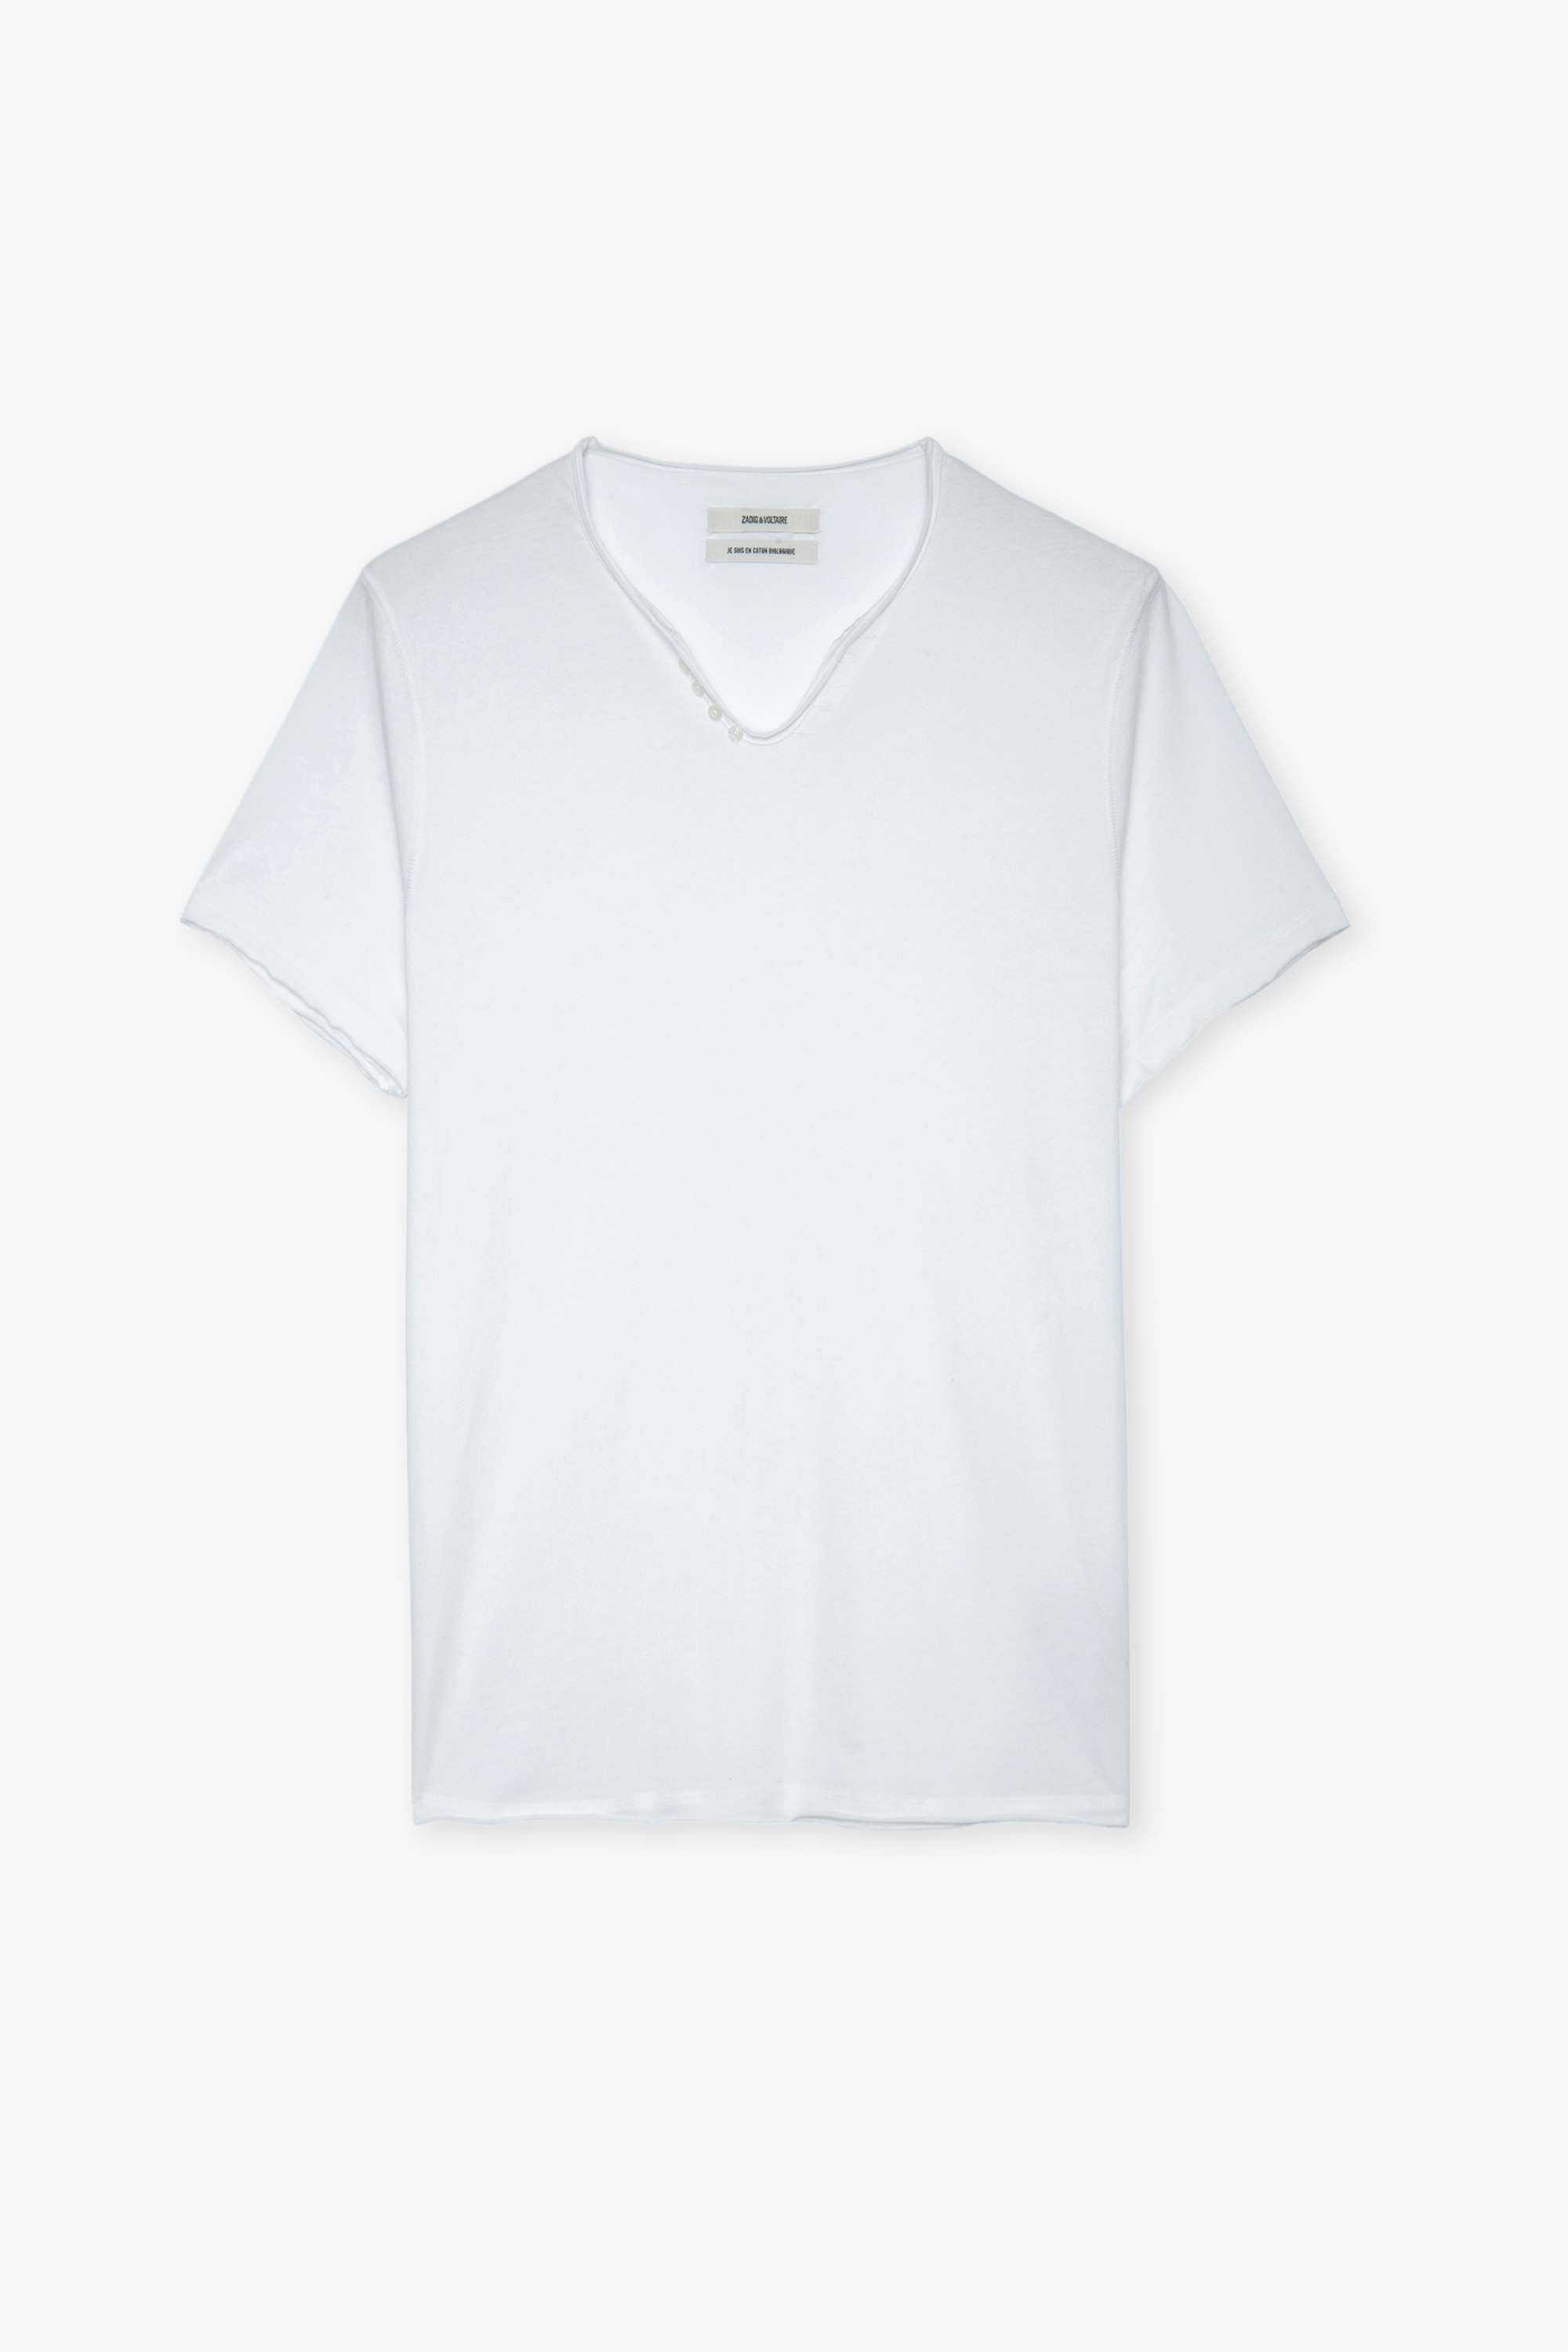 Tunisien Monastir Camiseta blanca para hombre